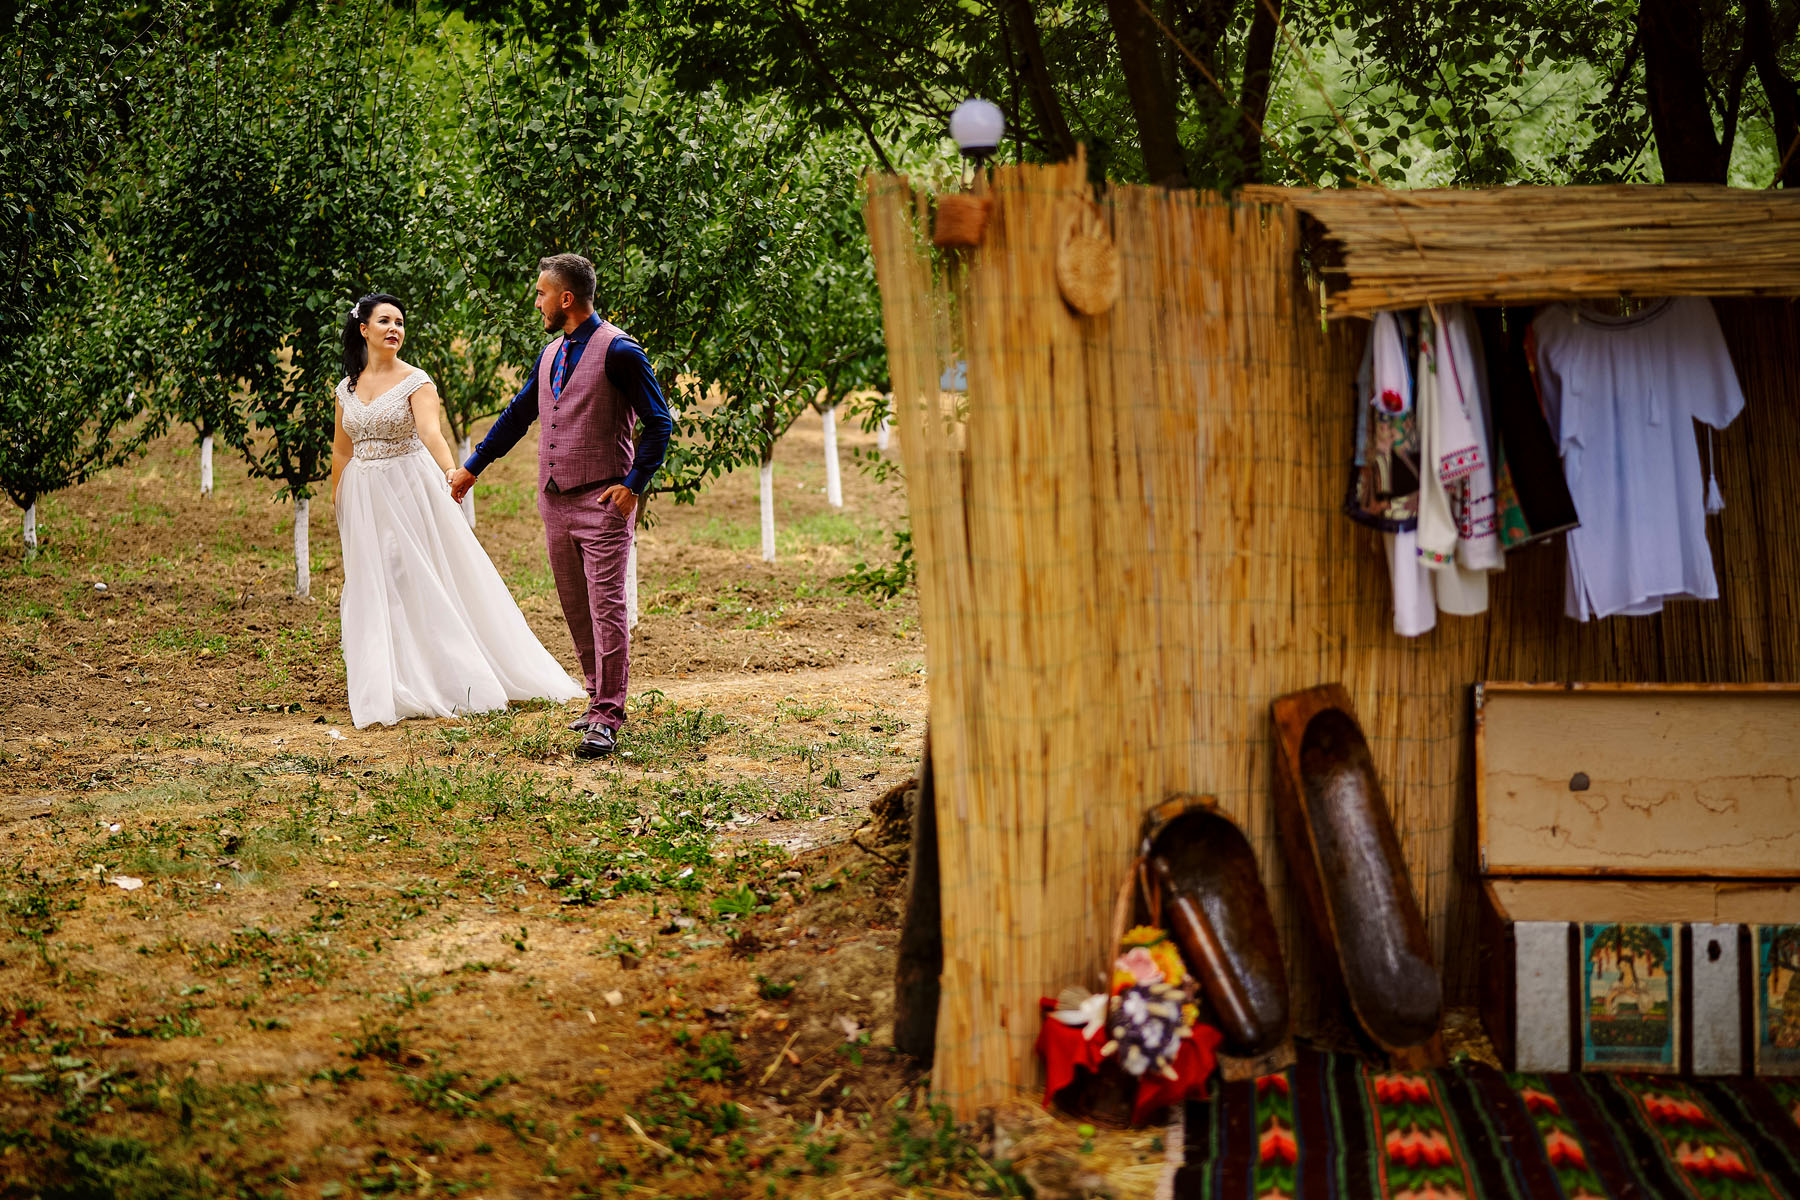 nunta autentica | fotograf Marius Marcoci